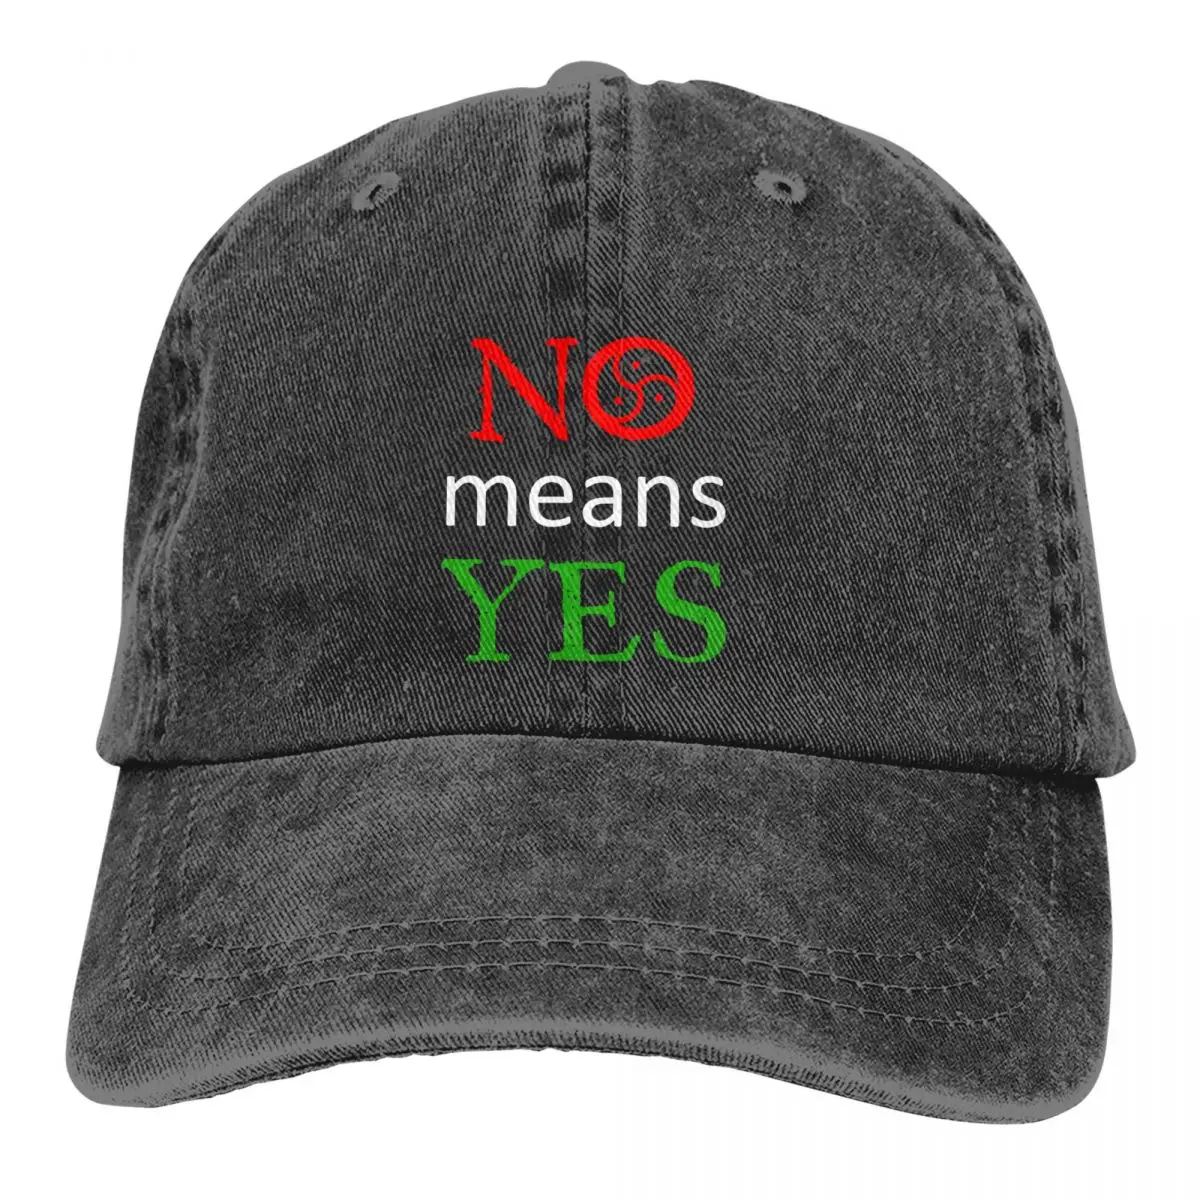 

BDSM Multicolor Hat Peaked Men Women's Cowboy Cap No Means Yes Baseball Caps Personalized Visor Protect Hats